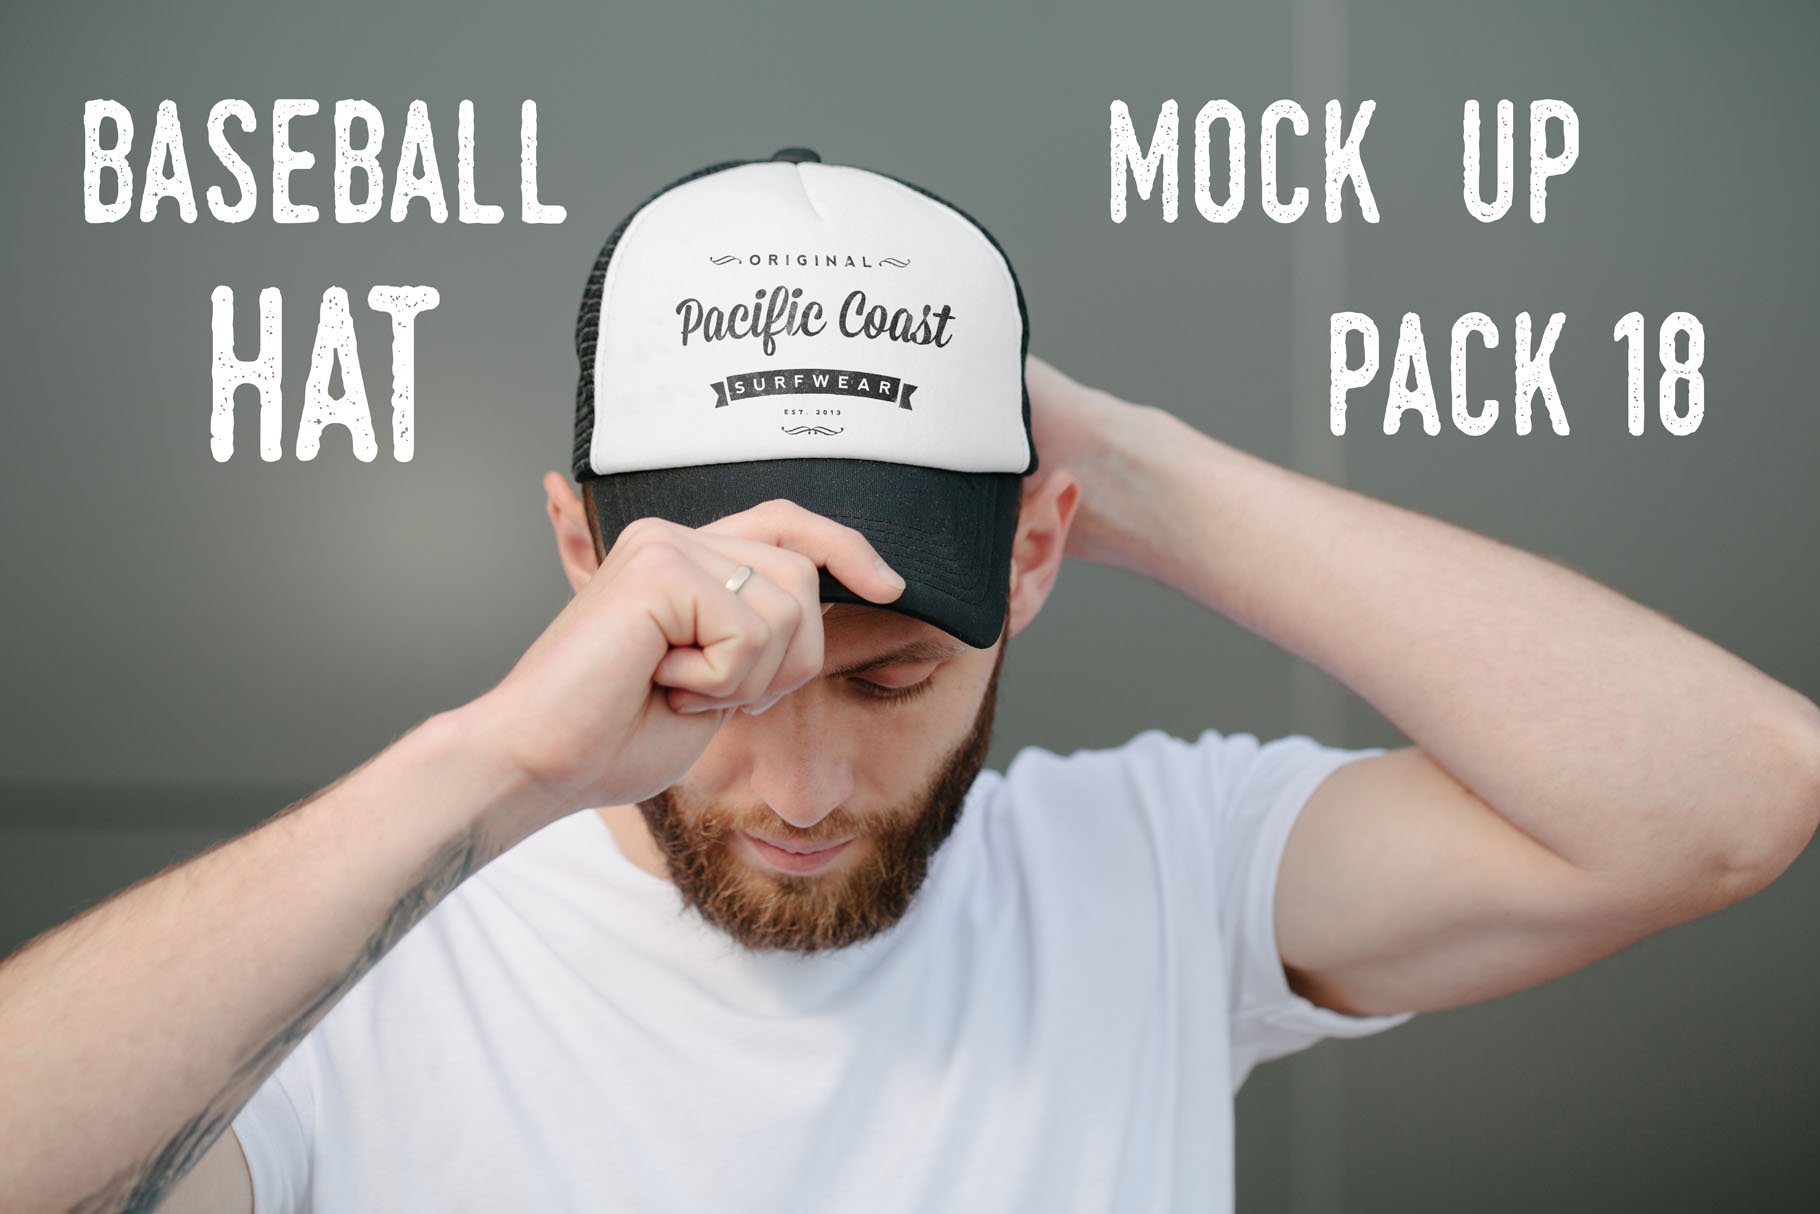 Baseball Hat Mock Up PACK 18 cover image.